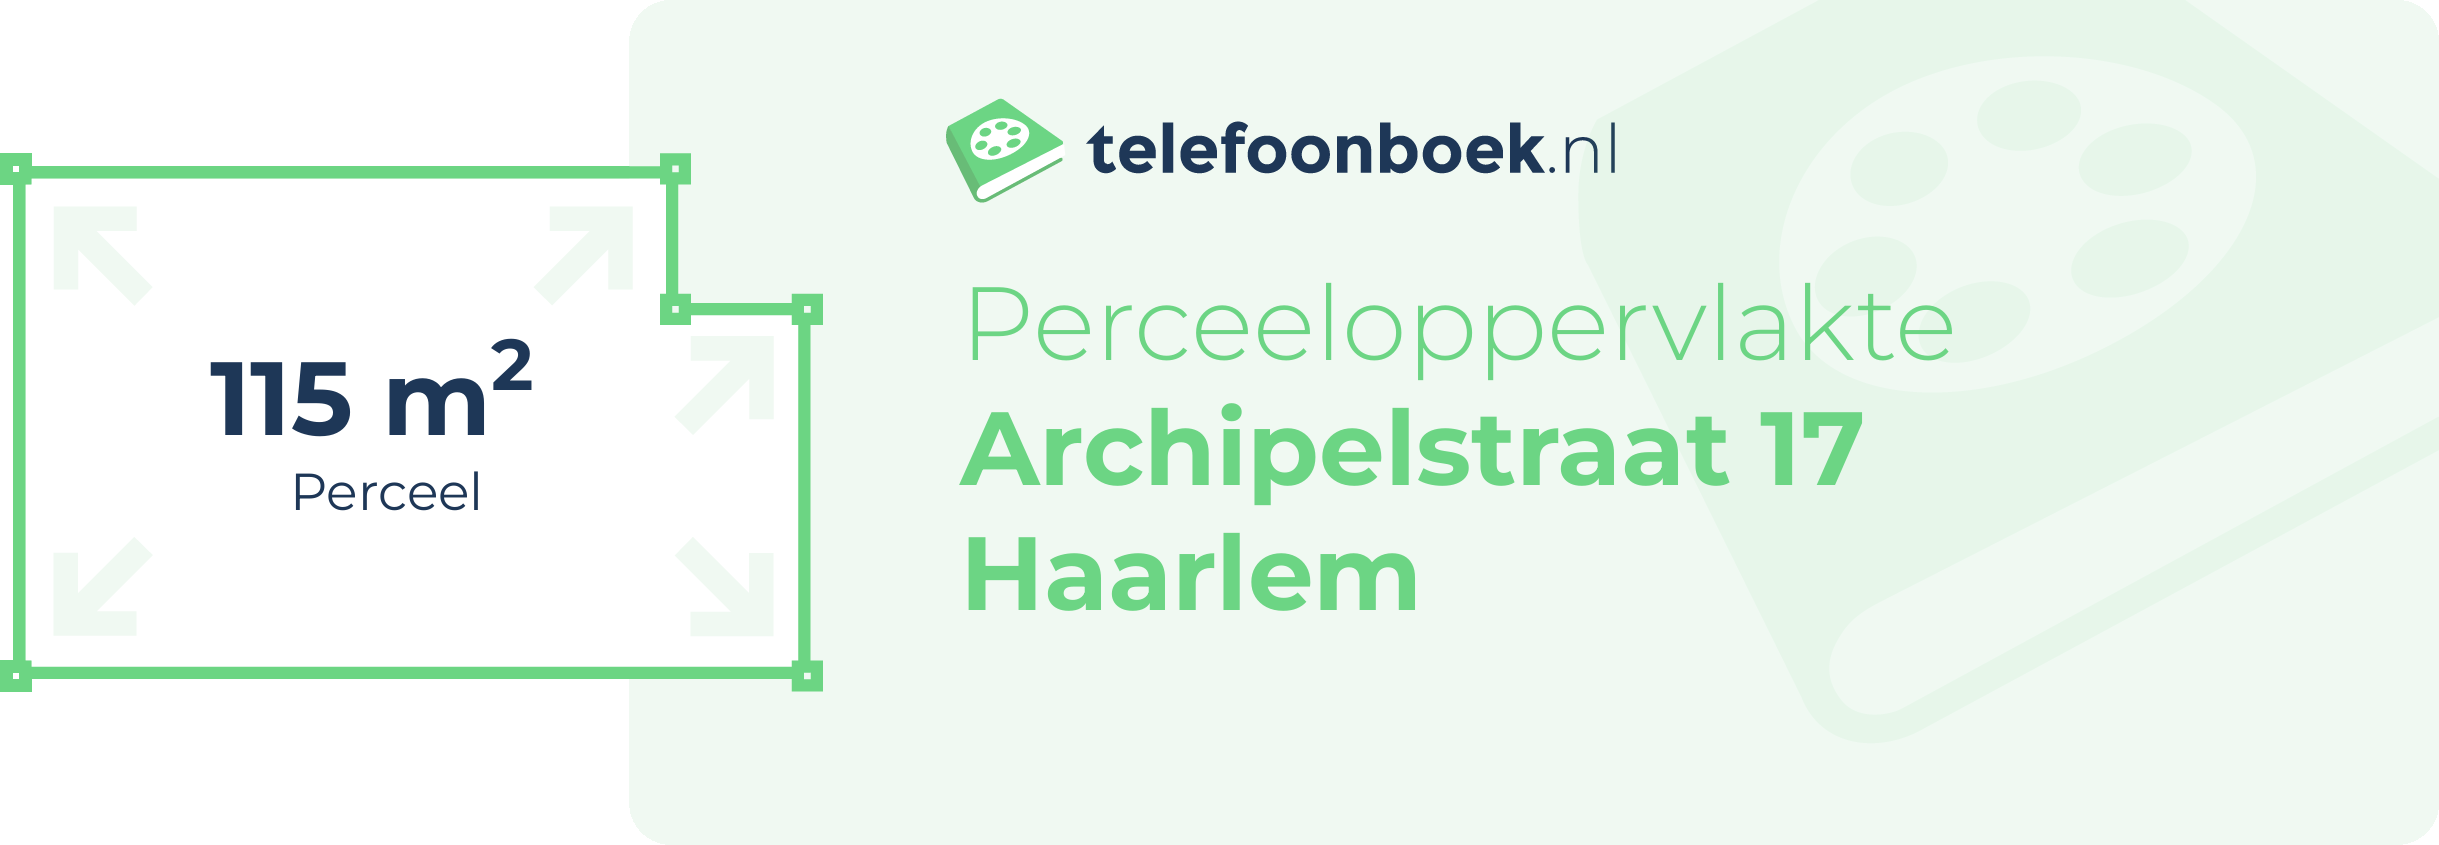 Perceeloppervlakte Archipelstraat 17 Haarlem